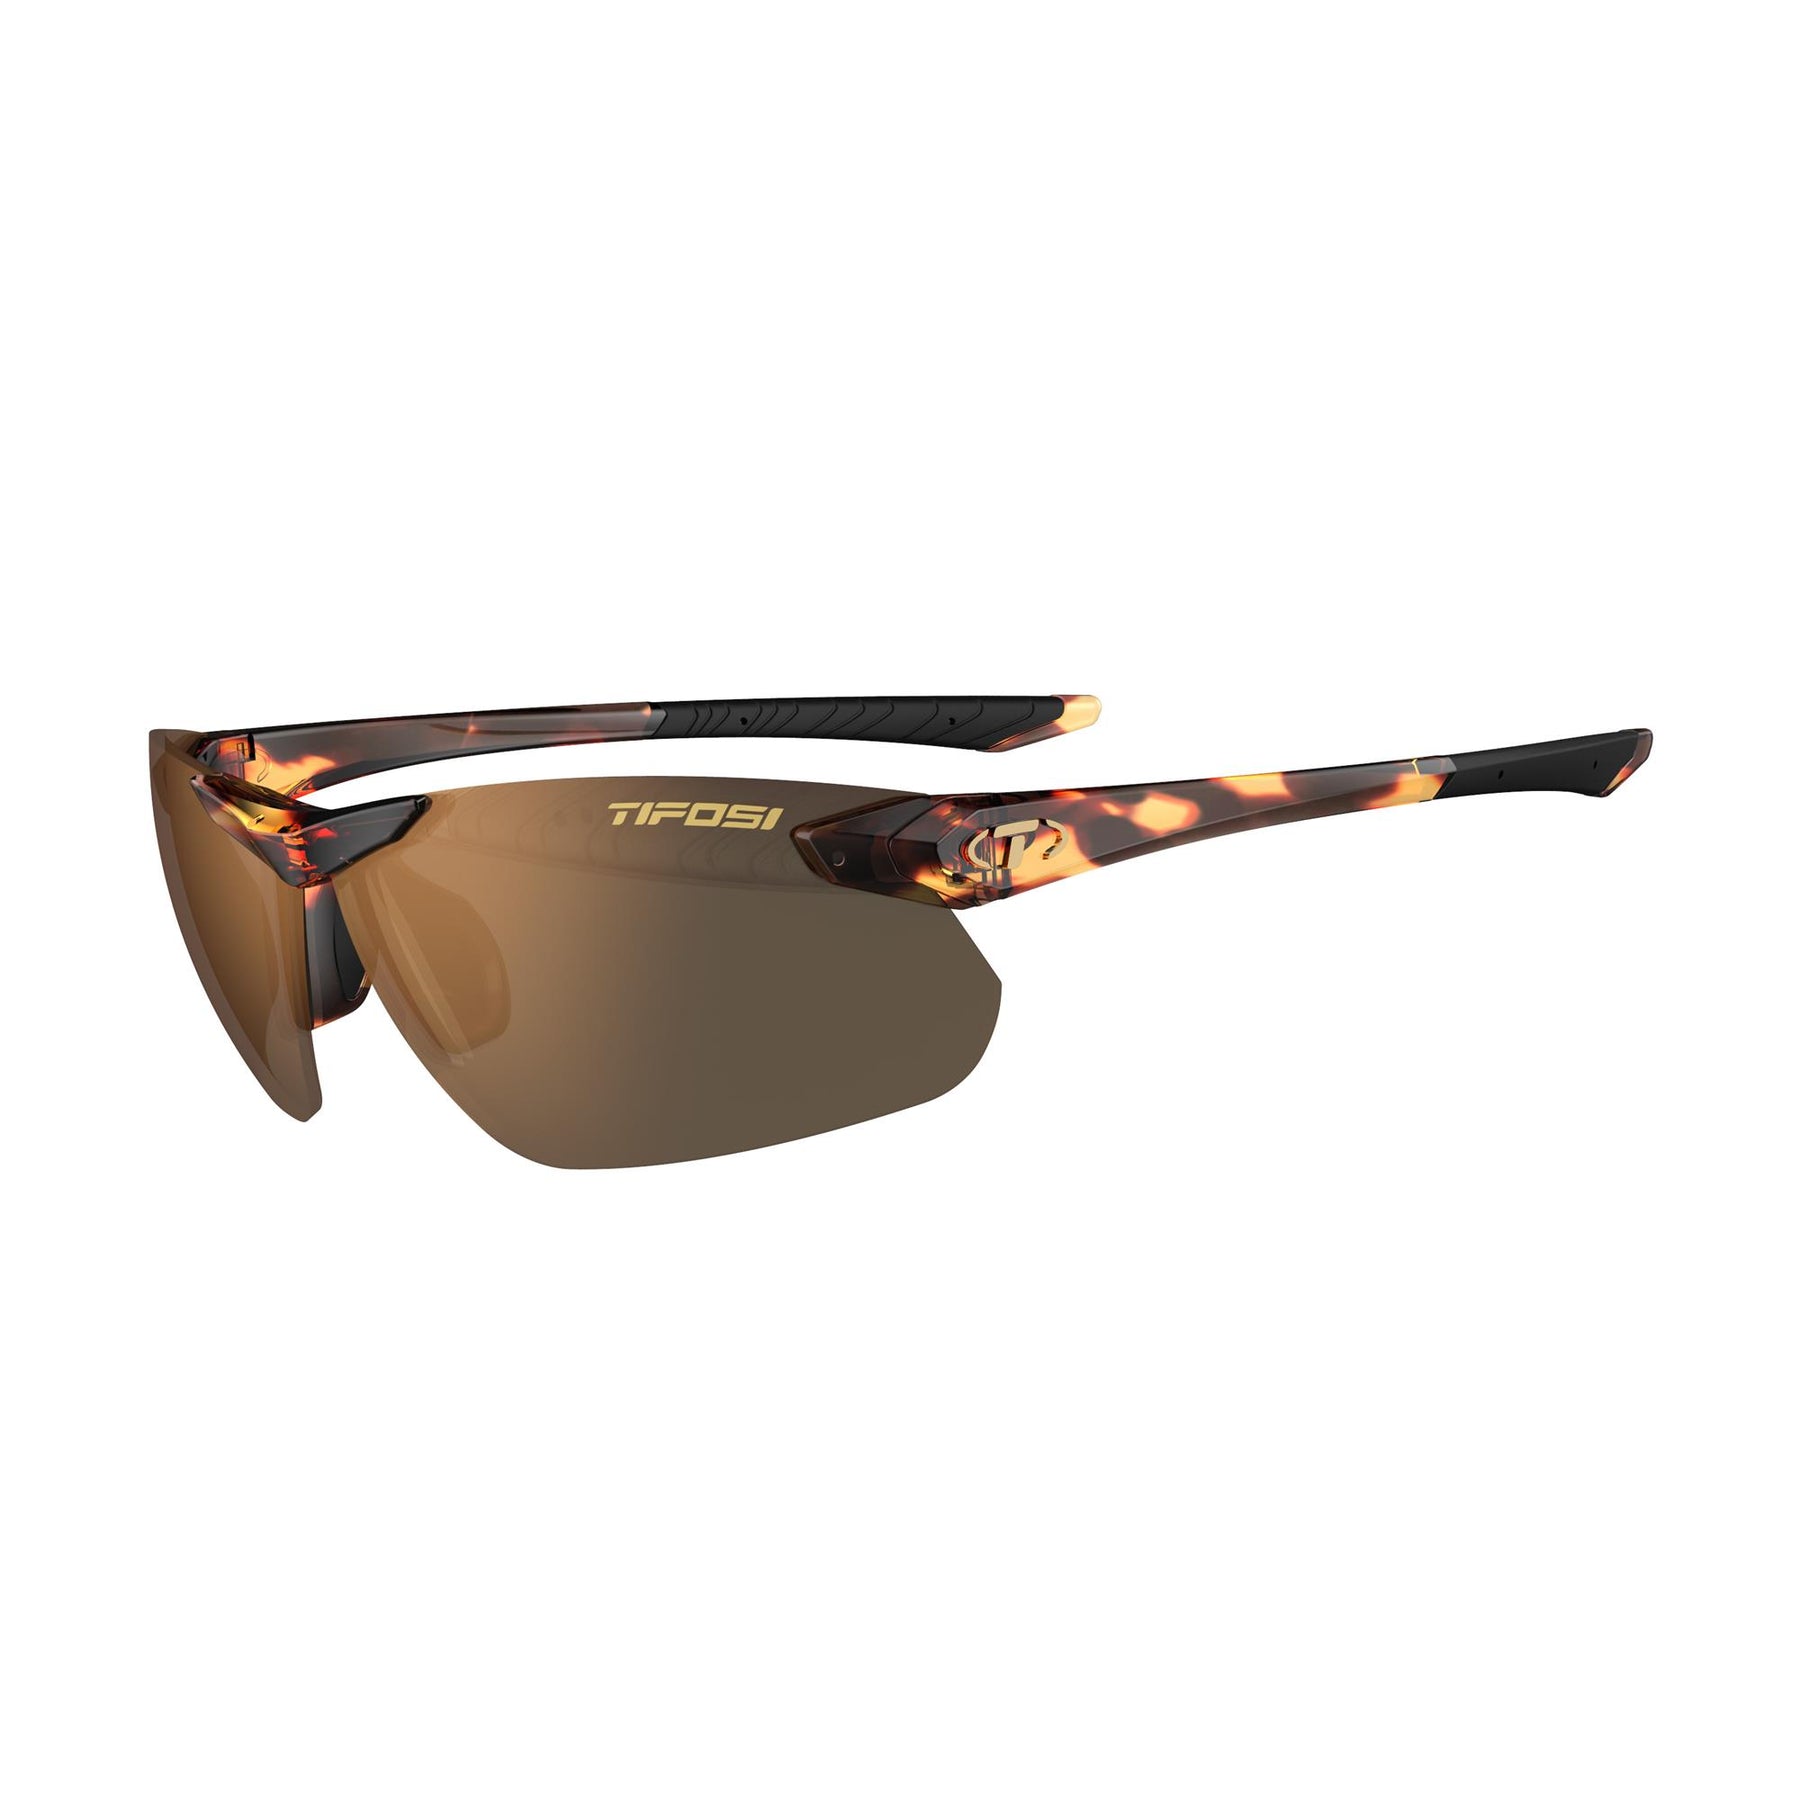 Tifosi Seek FC 2.0 Polarized Single Lens Sunglasses Tortoise Brown